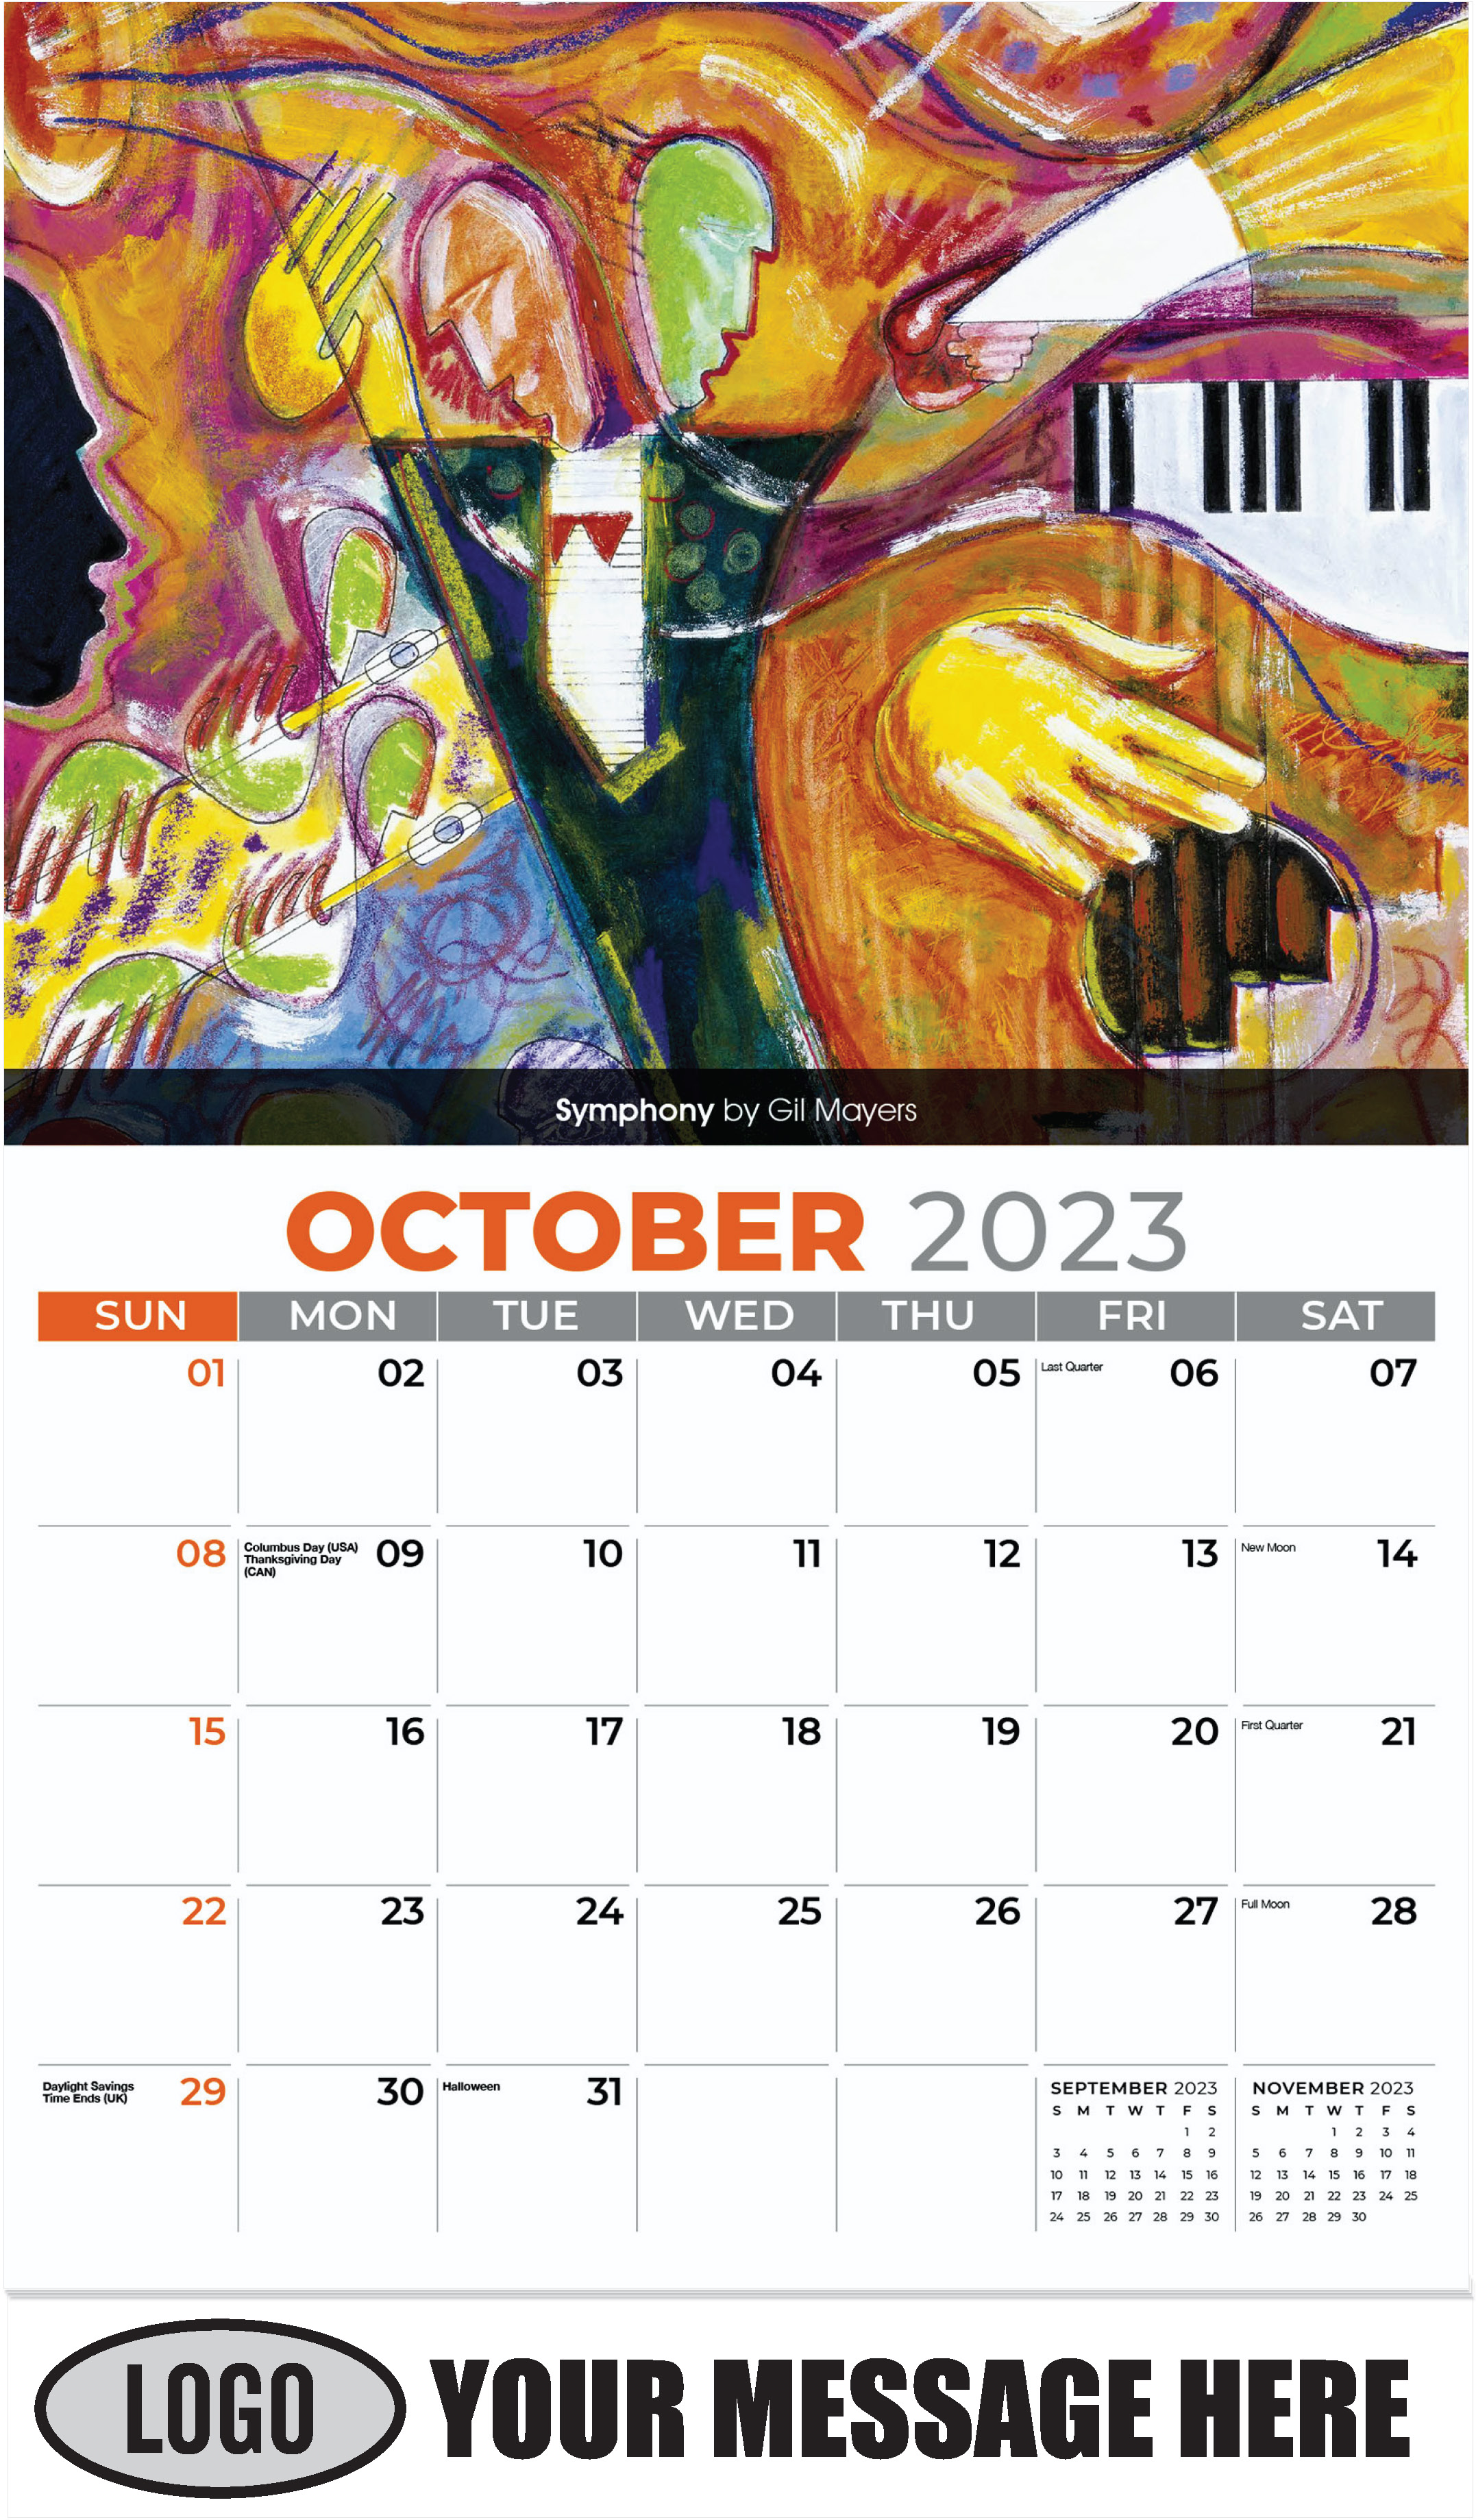 Symphony by Gil Mayers - October - Celebration of African American Art 2023 Promotional Calendar